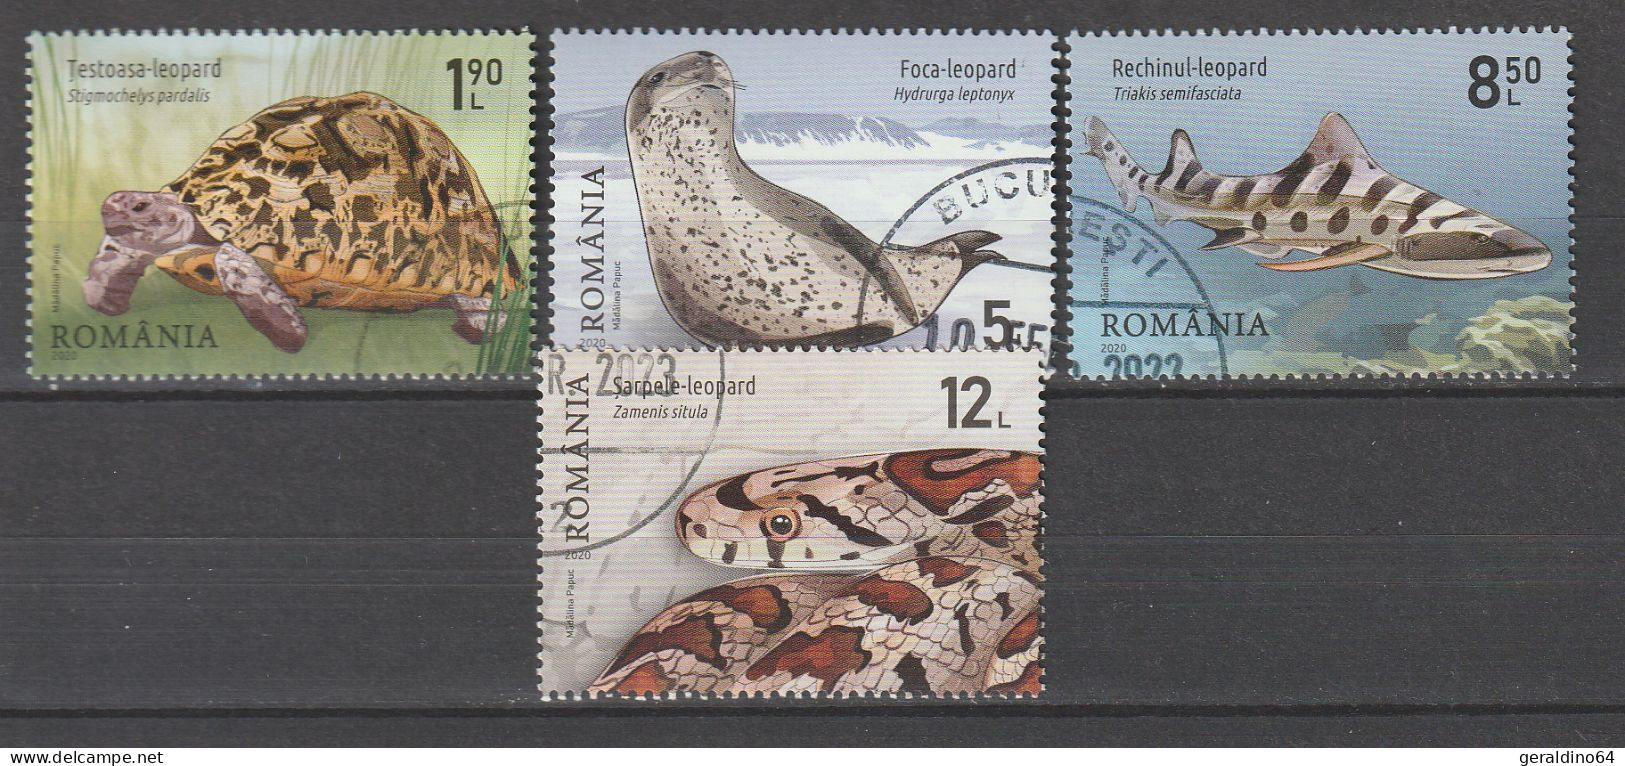 Rumänien 2020 Mi Tiere Mit Leopardenmuster Mi 7723 - 7726 Gestempelt Used - Used Stamps